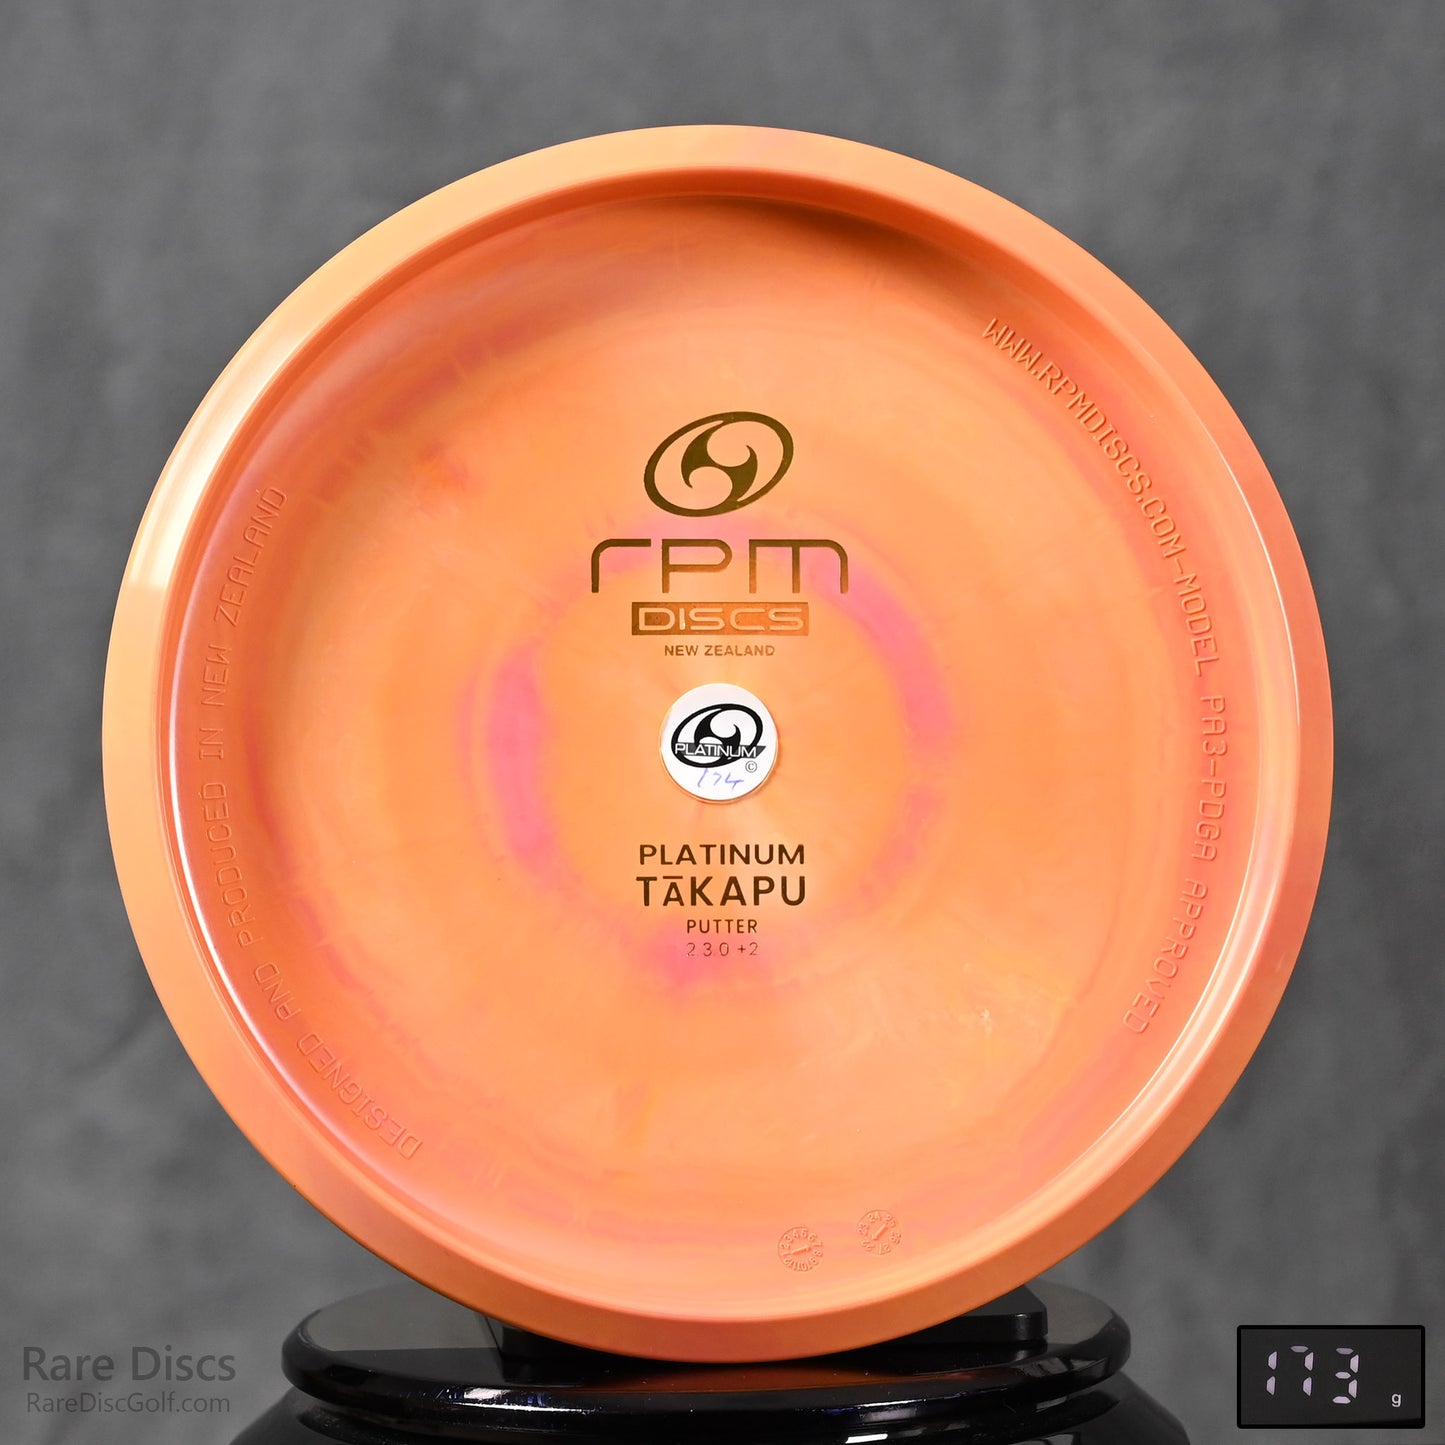 RPM Takapu - Platinum Bottom Stamp